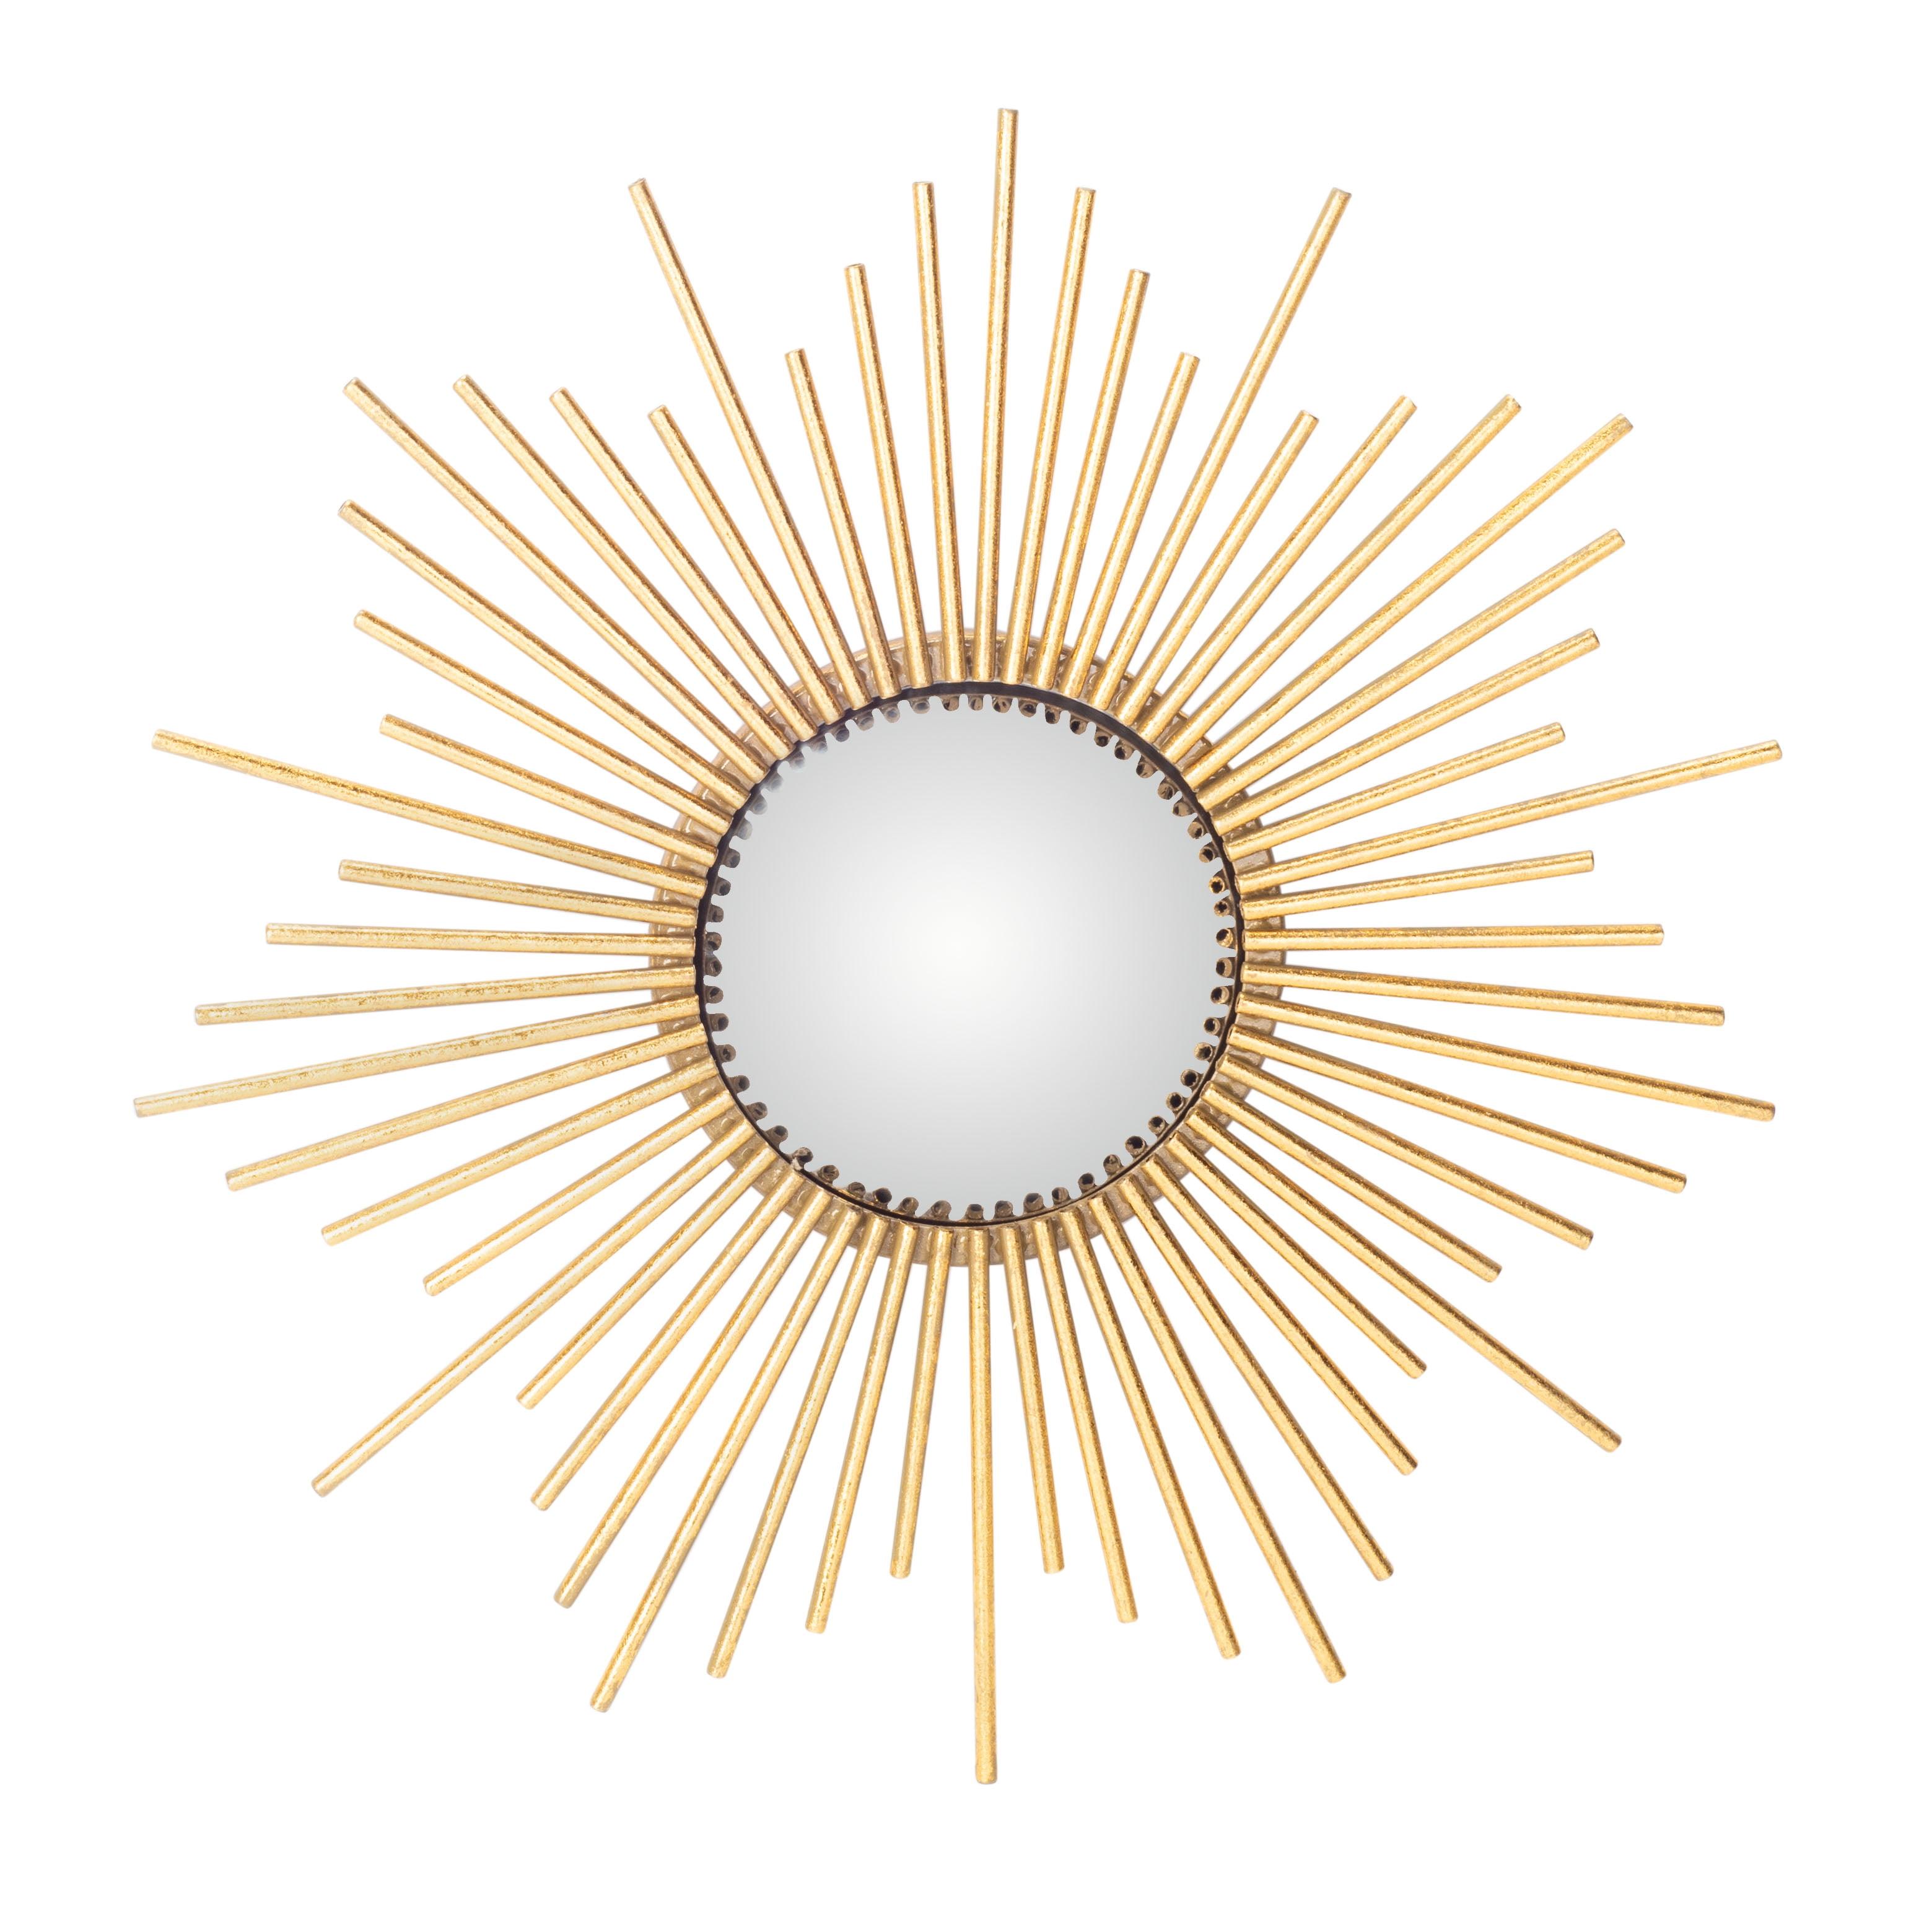 Contemporary Sunburst Round Wood Mirror in Gold Finish, 24"